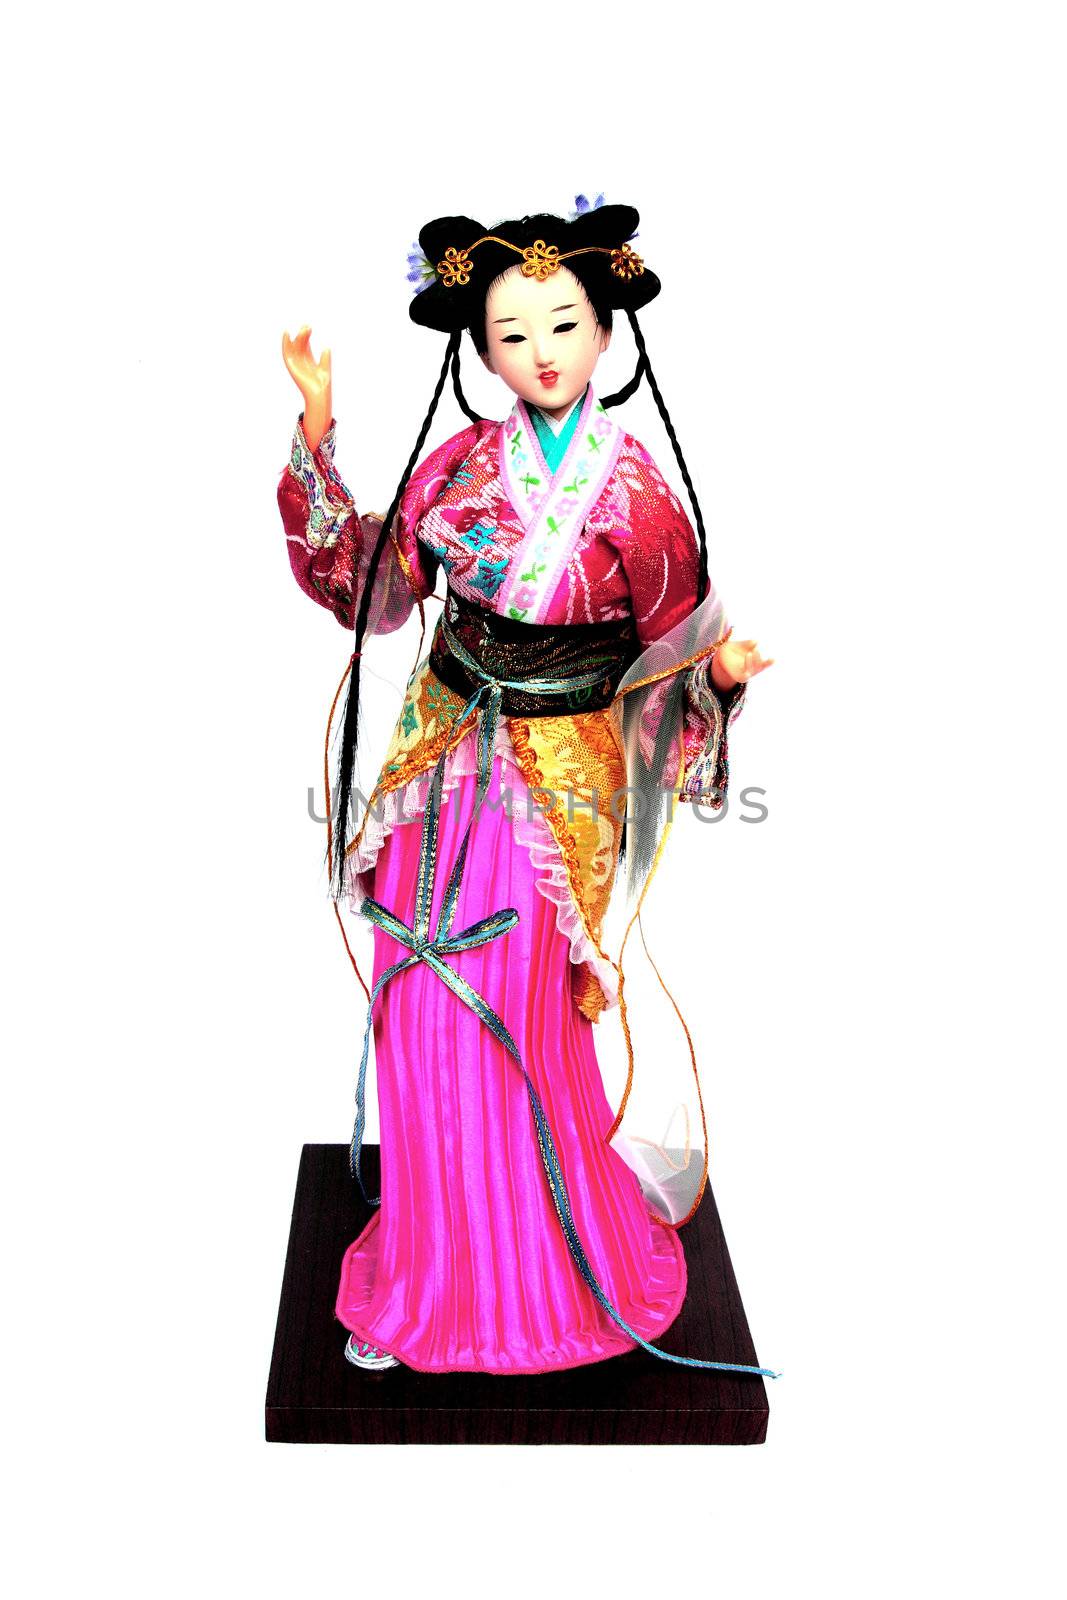 beautiful lady doll is Korea national dress